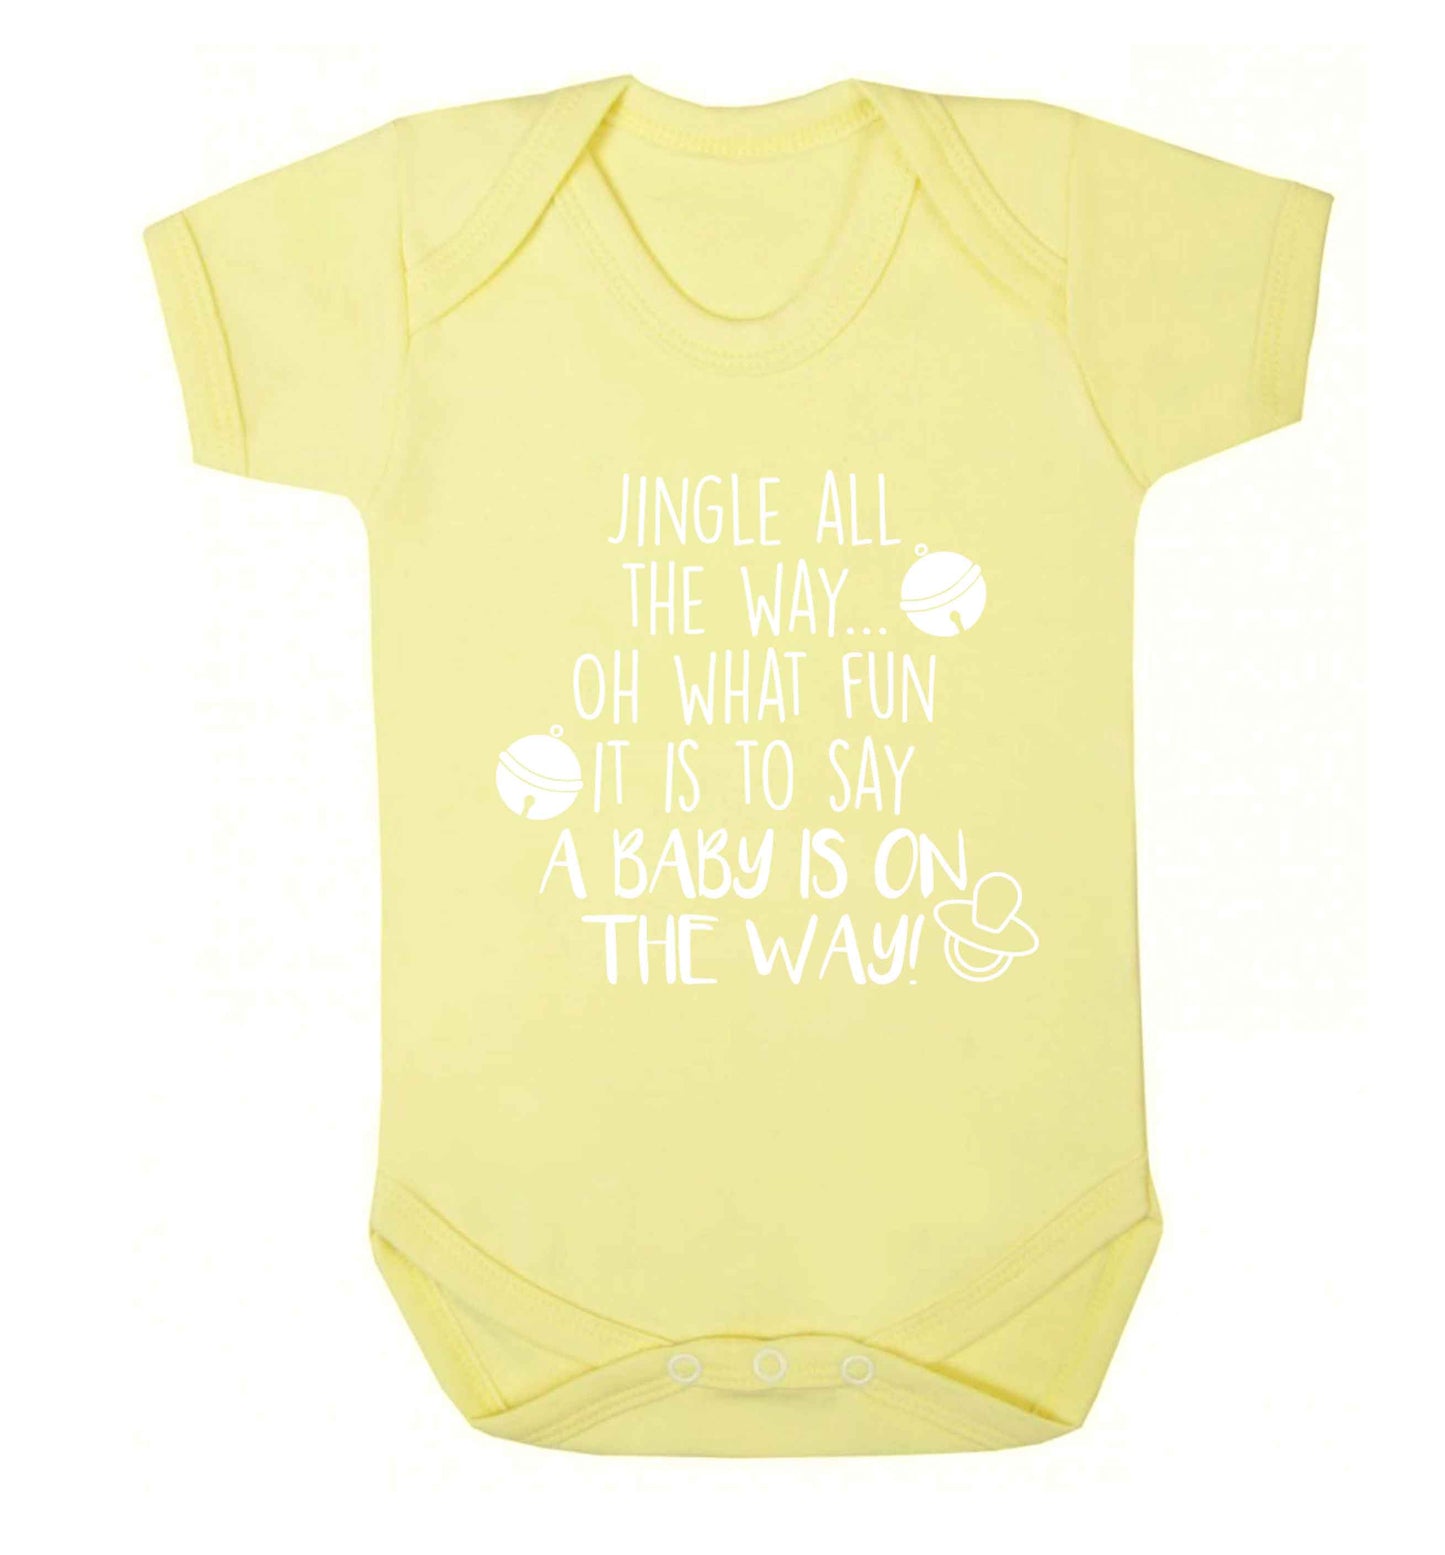 Oh what fun it is to say a baby is on the way! Baby Vest pale yellow 18-24 months